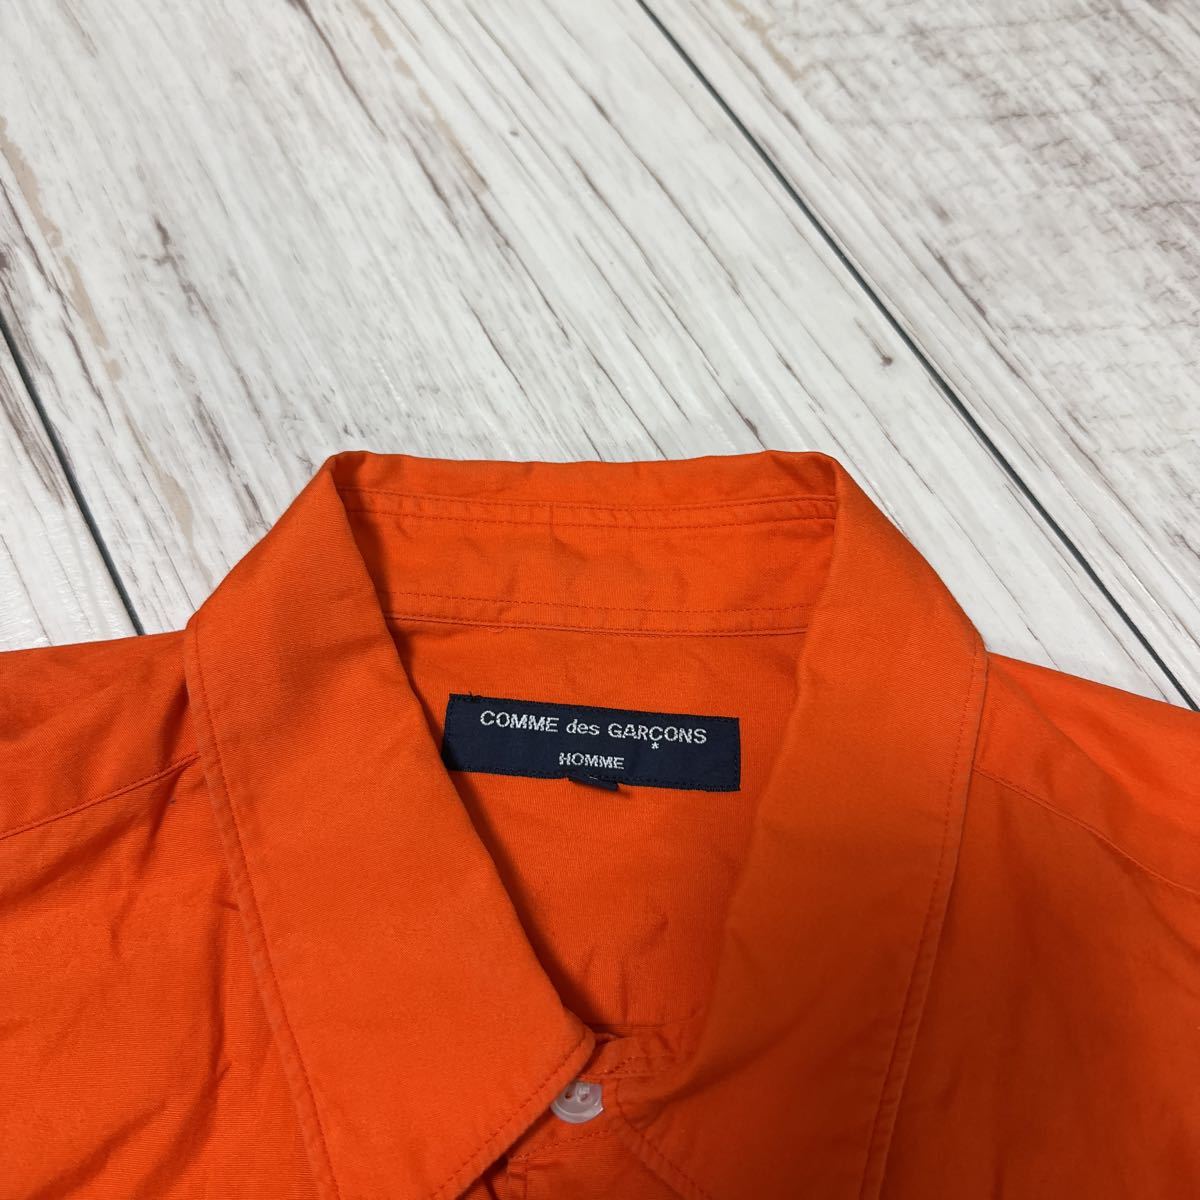 COMME des GARCONS HOMME Comme des Garcons Homme AD2005 line shirt S size orange 